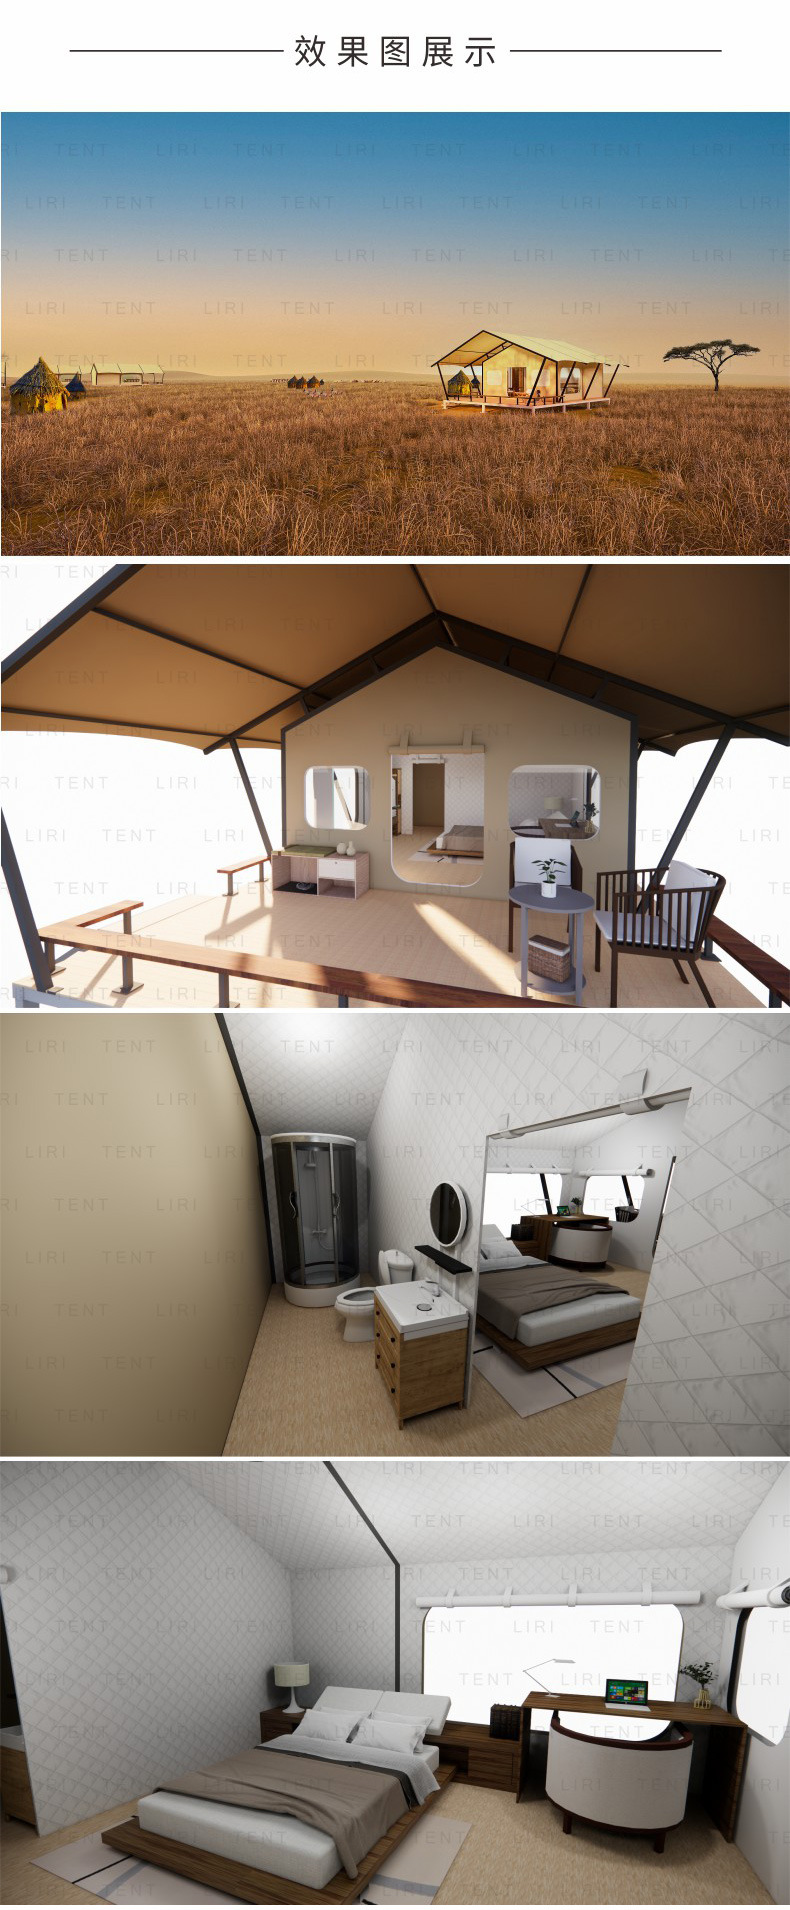 Outdoor outdoor tent waterproof luxury nomadic hotel tent luxury vacation homestay tent aluminum alloy